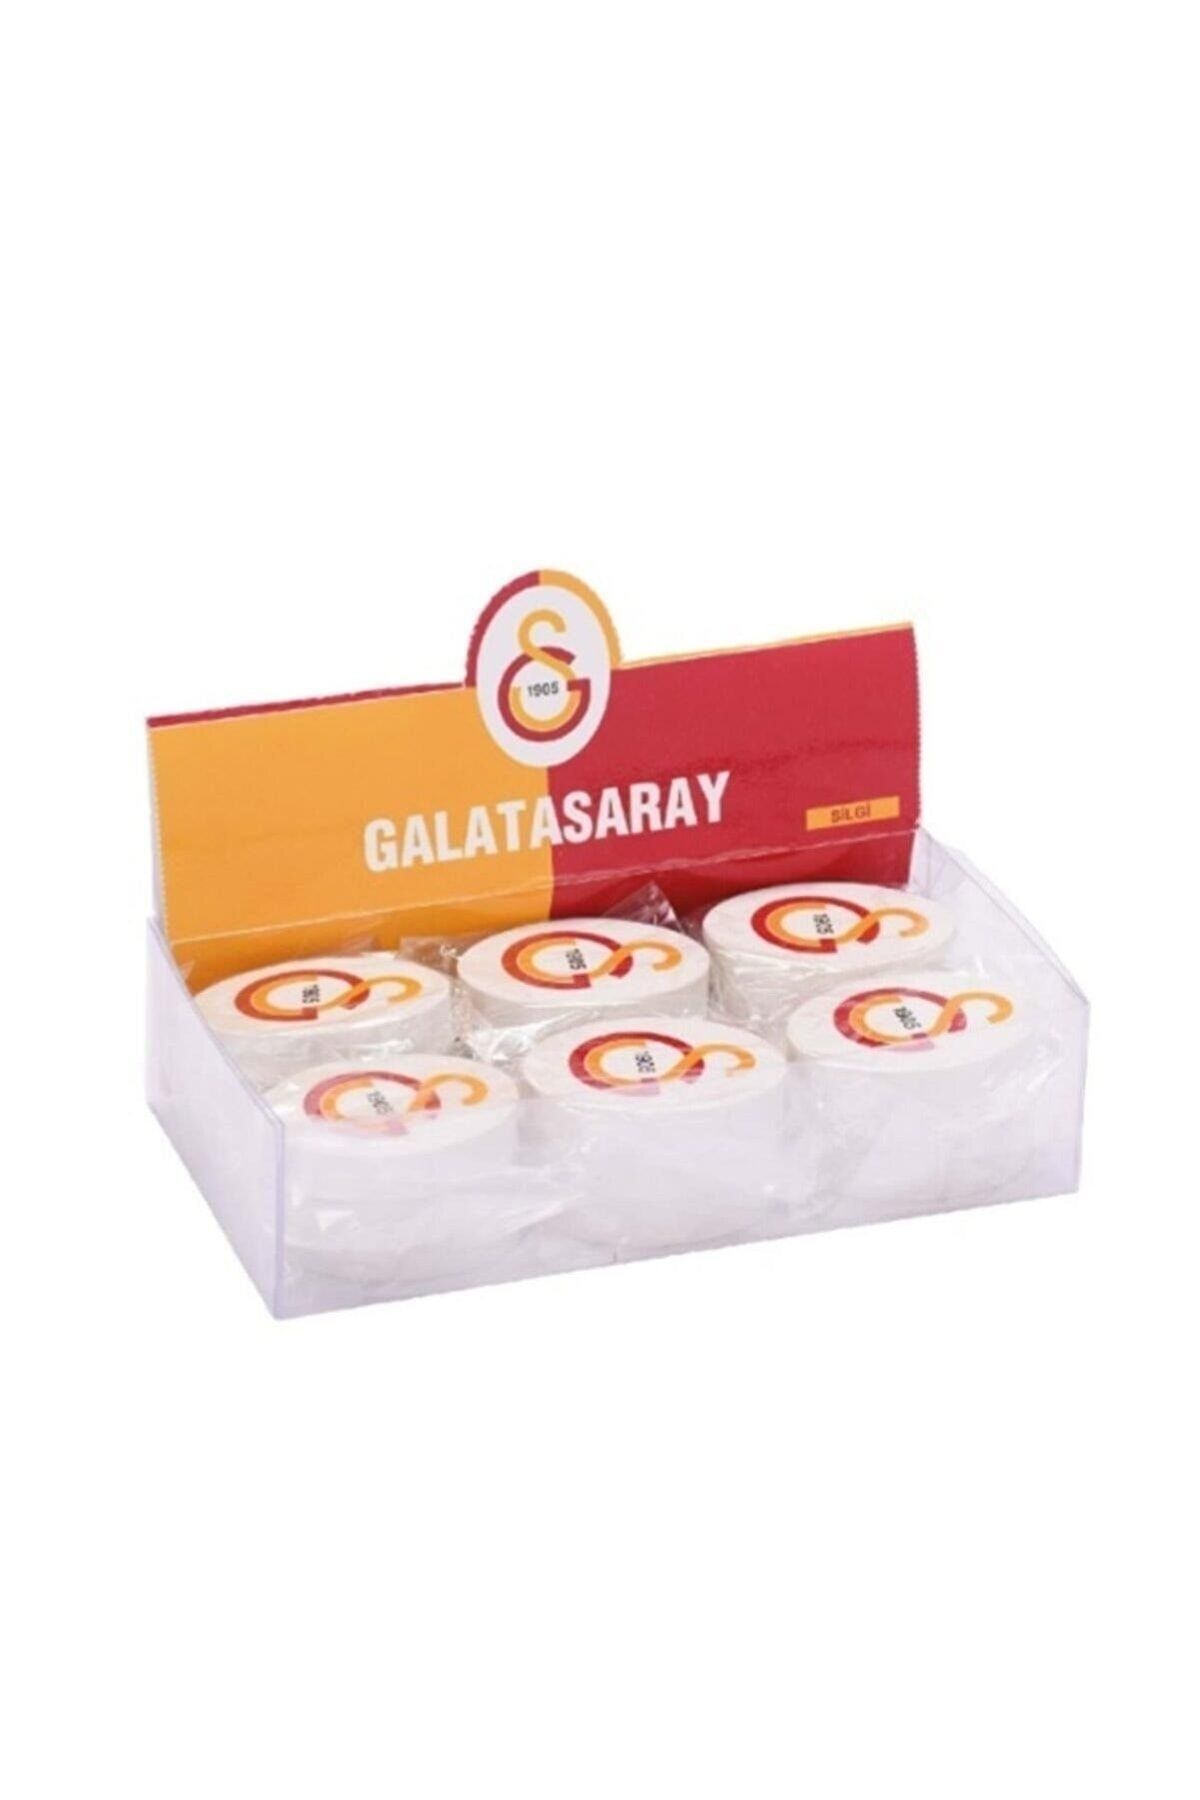 Galatasaray Tmn Galatasaray Şekilli Silgi 473288 (36 Lı Paket)